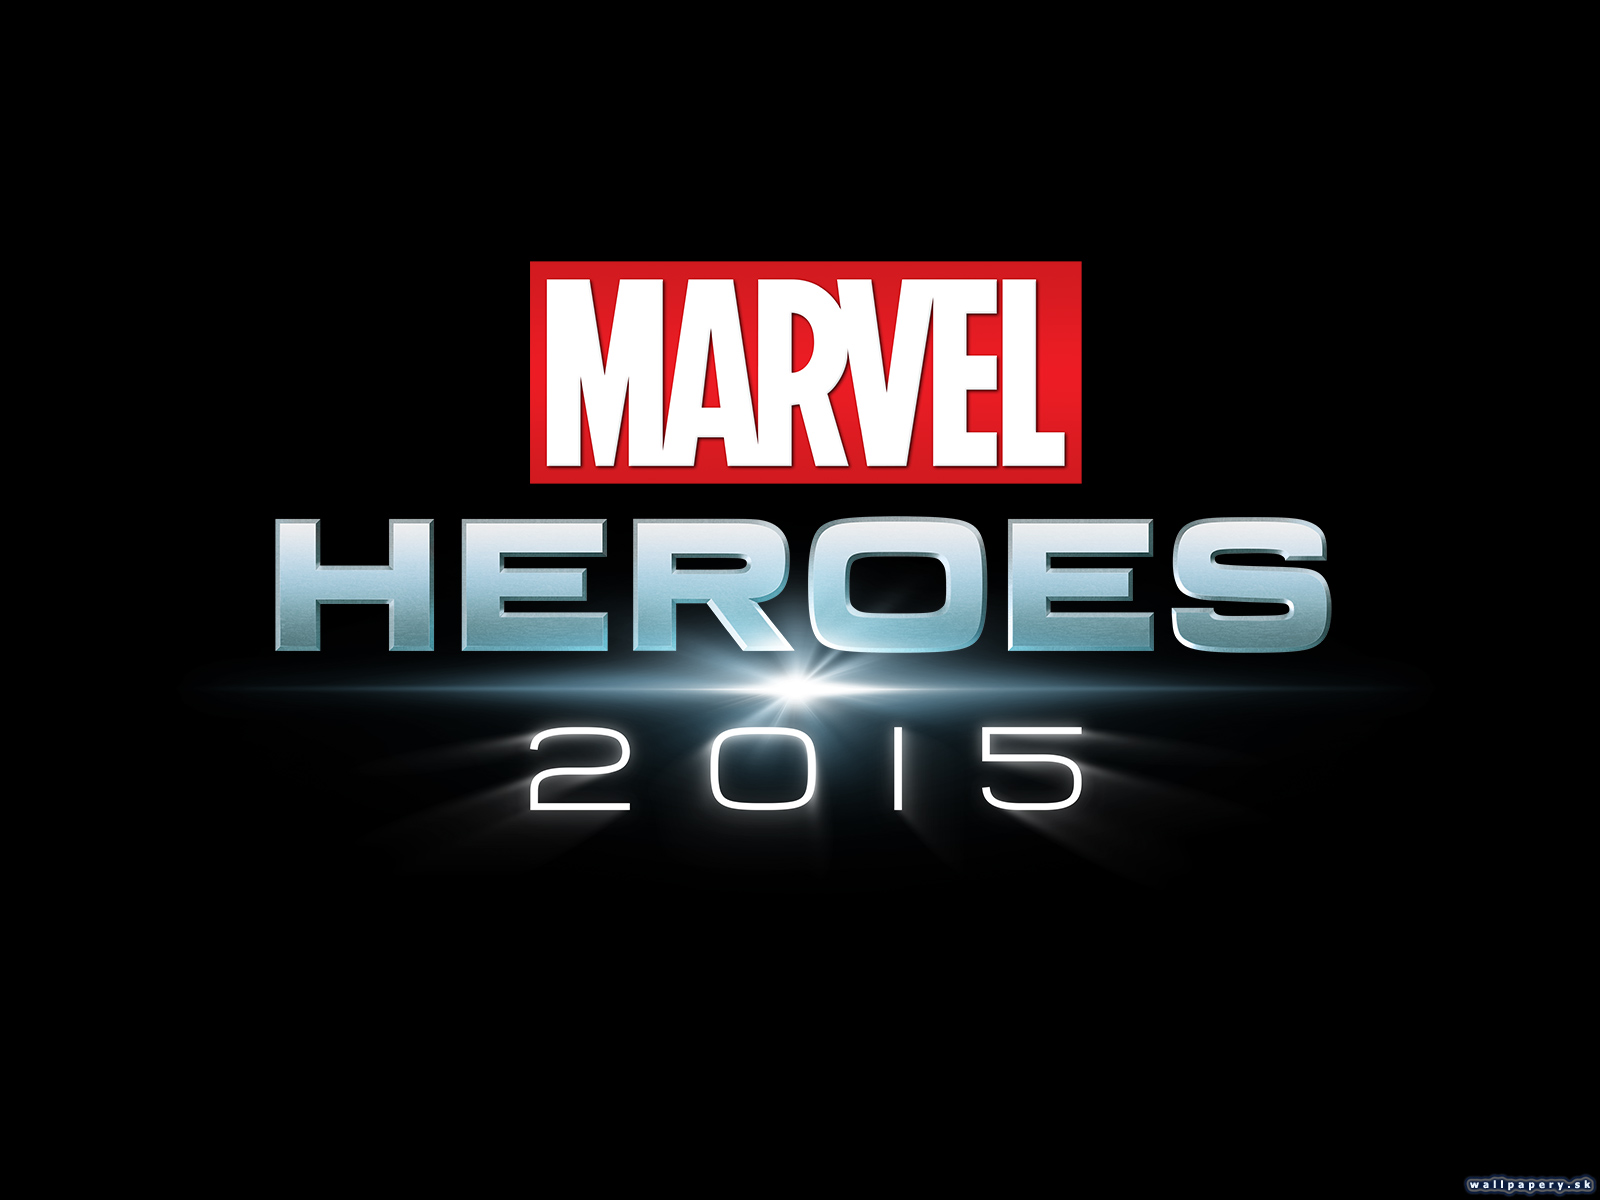 Marvel Heroes 2015 - wallpaper 2